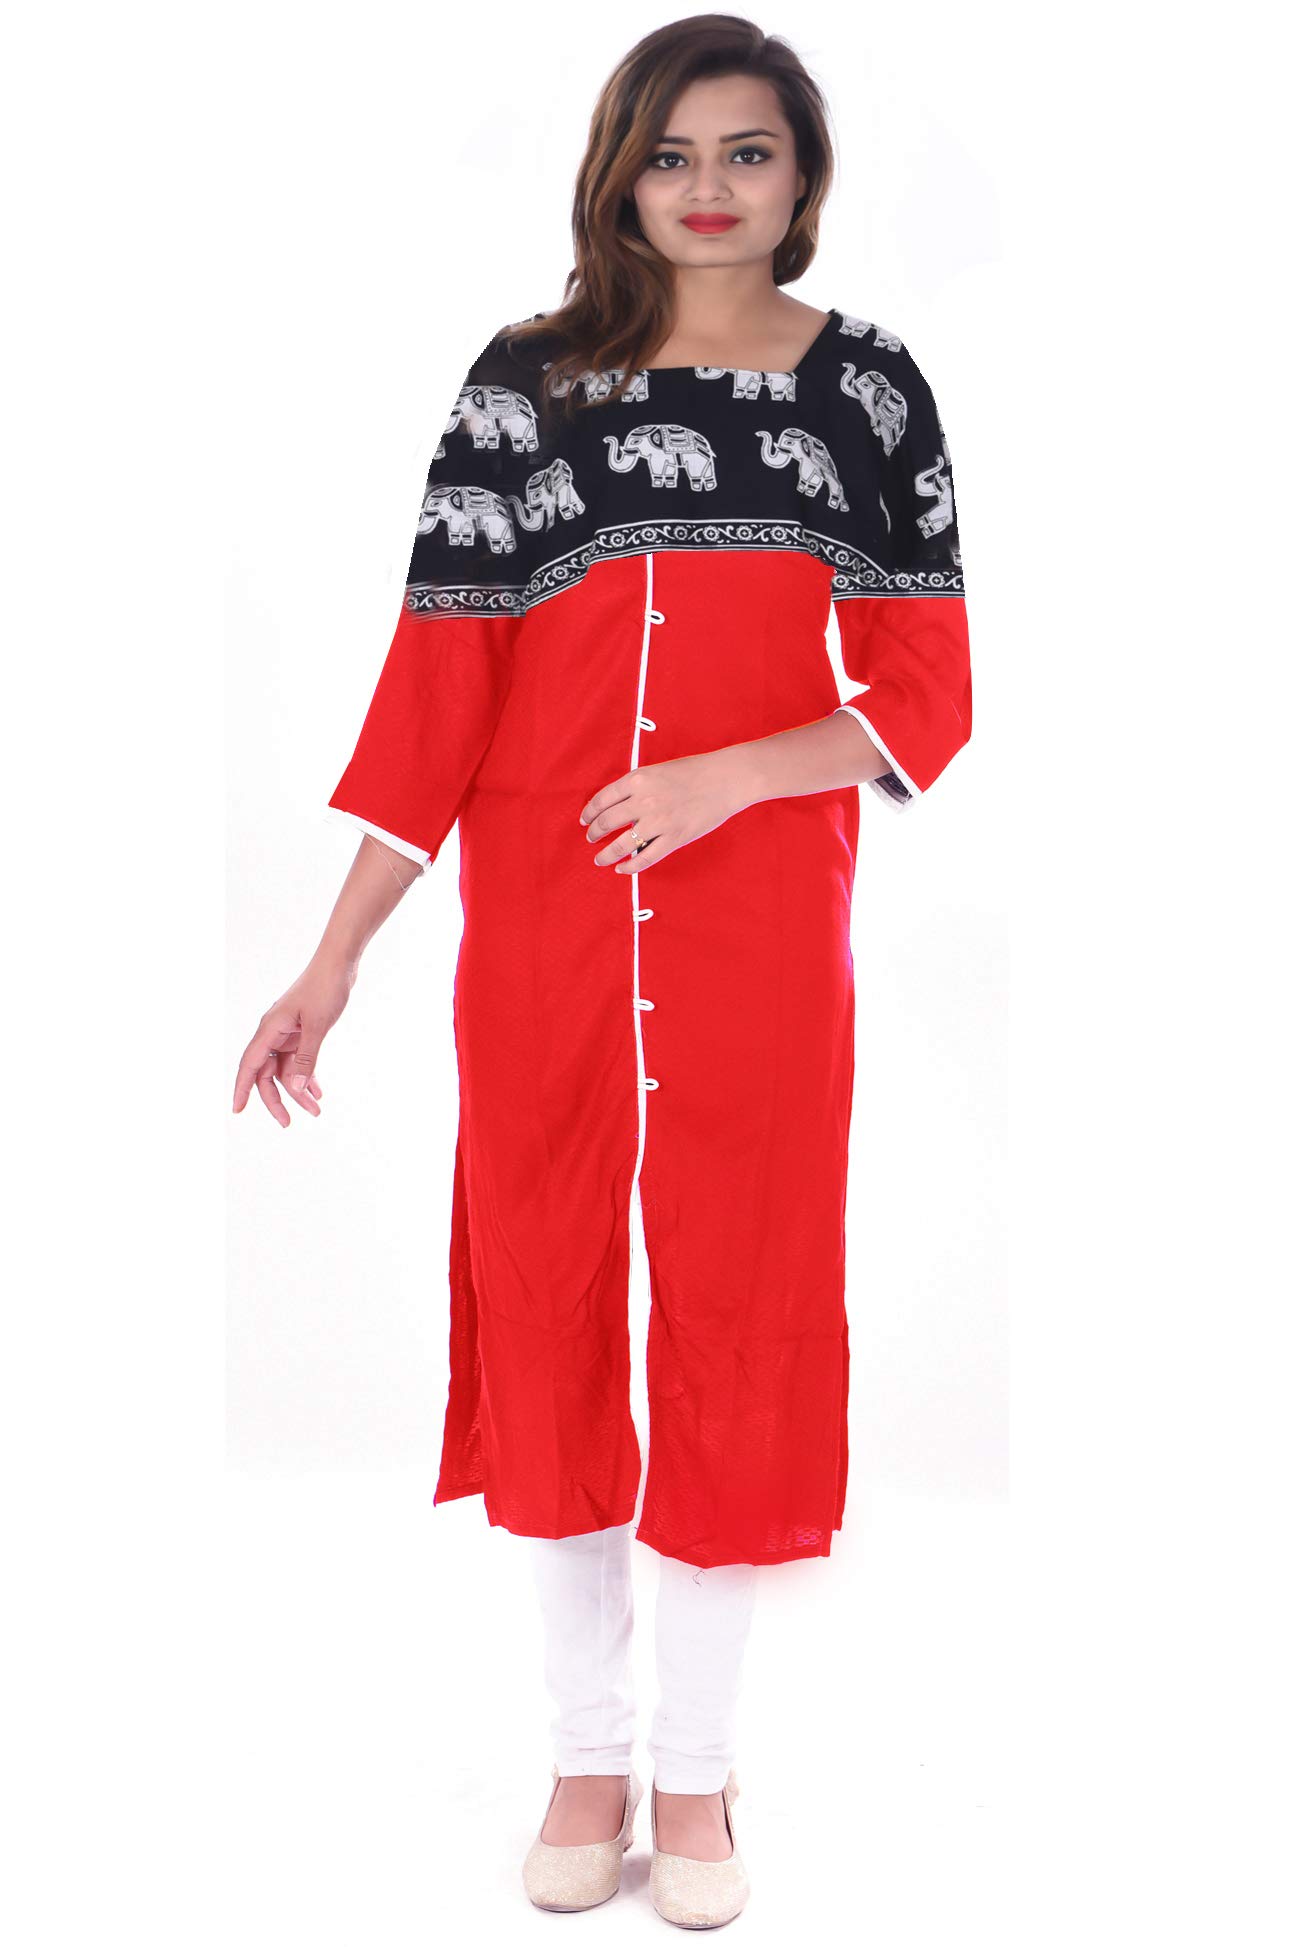 lakkar haveli Indian 100% Cotton Red Color Dress Women Fashion Long Elephant Print Plus Size